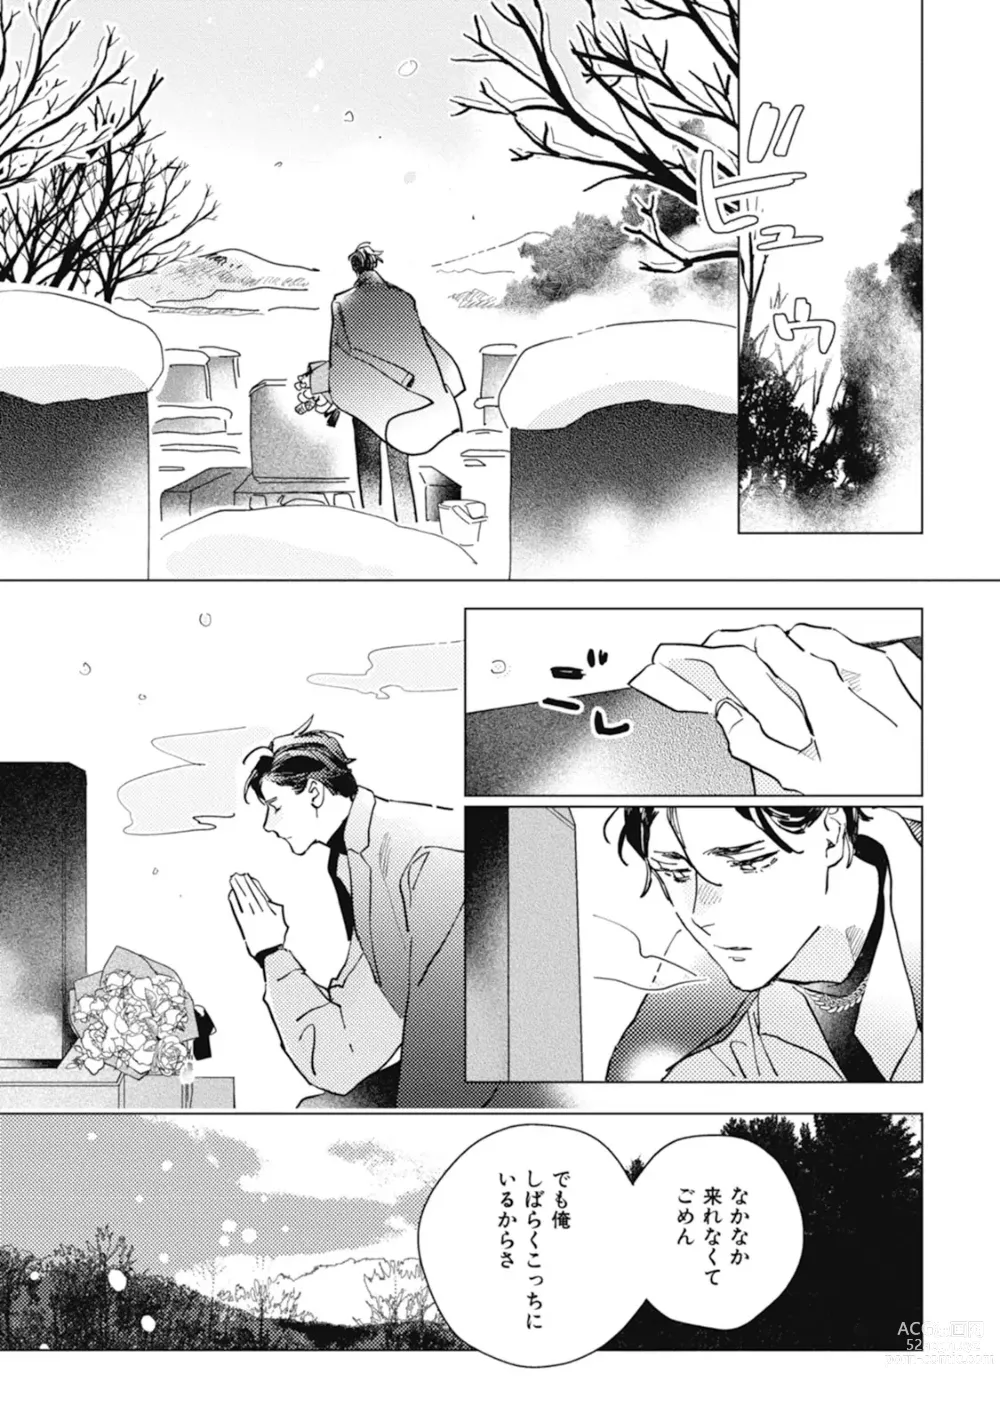 Page 19 of manga Kurikaeshi Ai no Oto